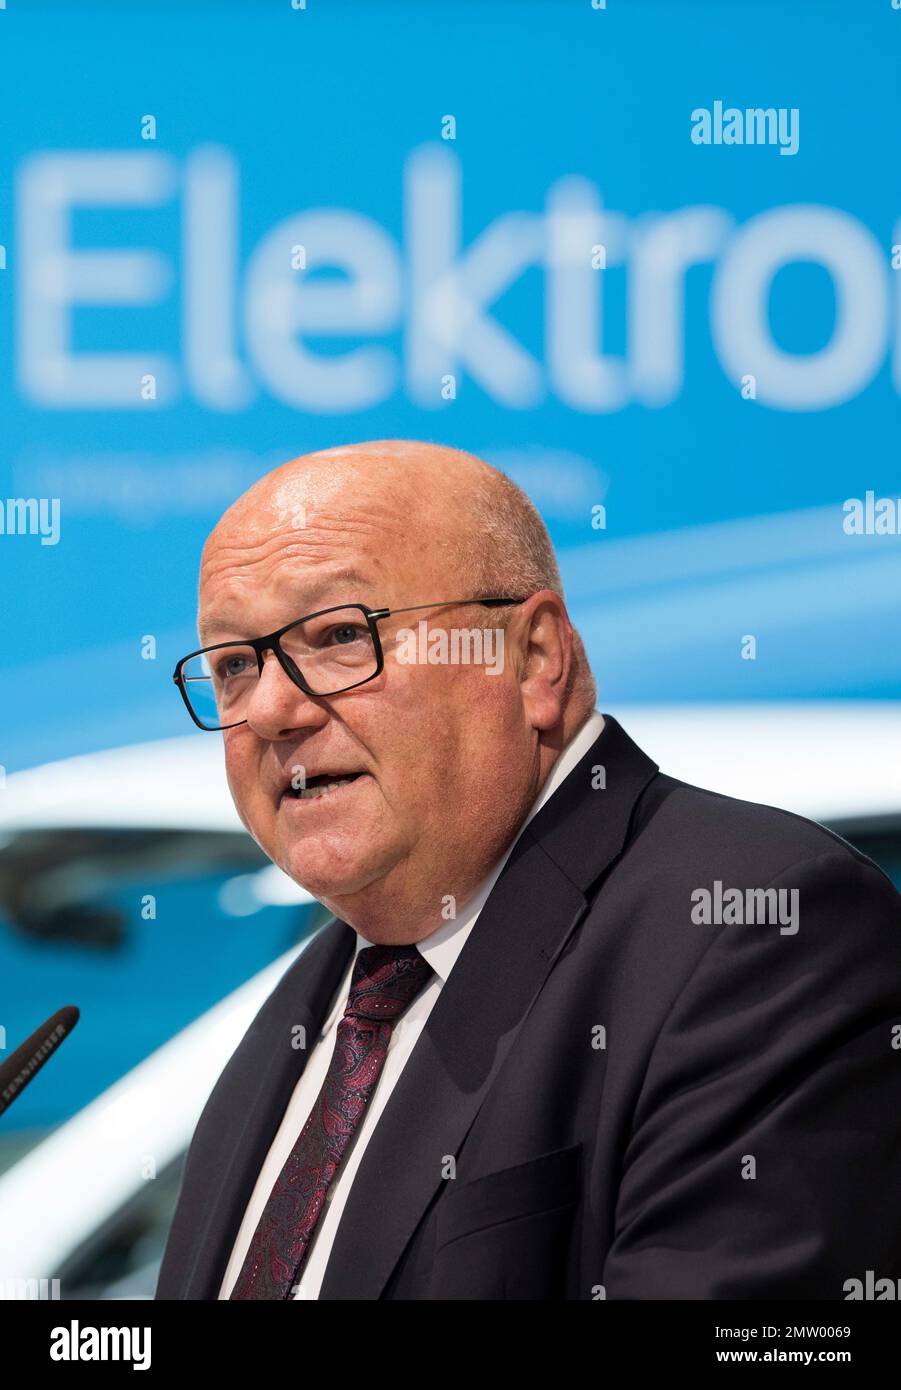 Siegfried Fiebig, spokesman of Volkswagen Saxony, delivers a